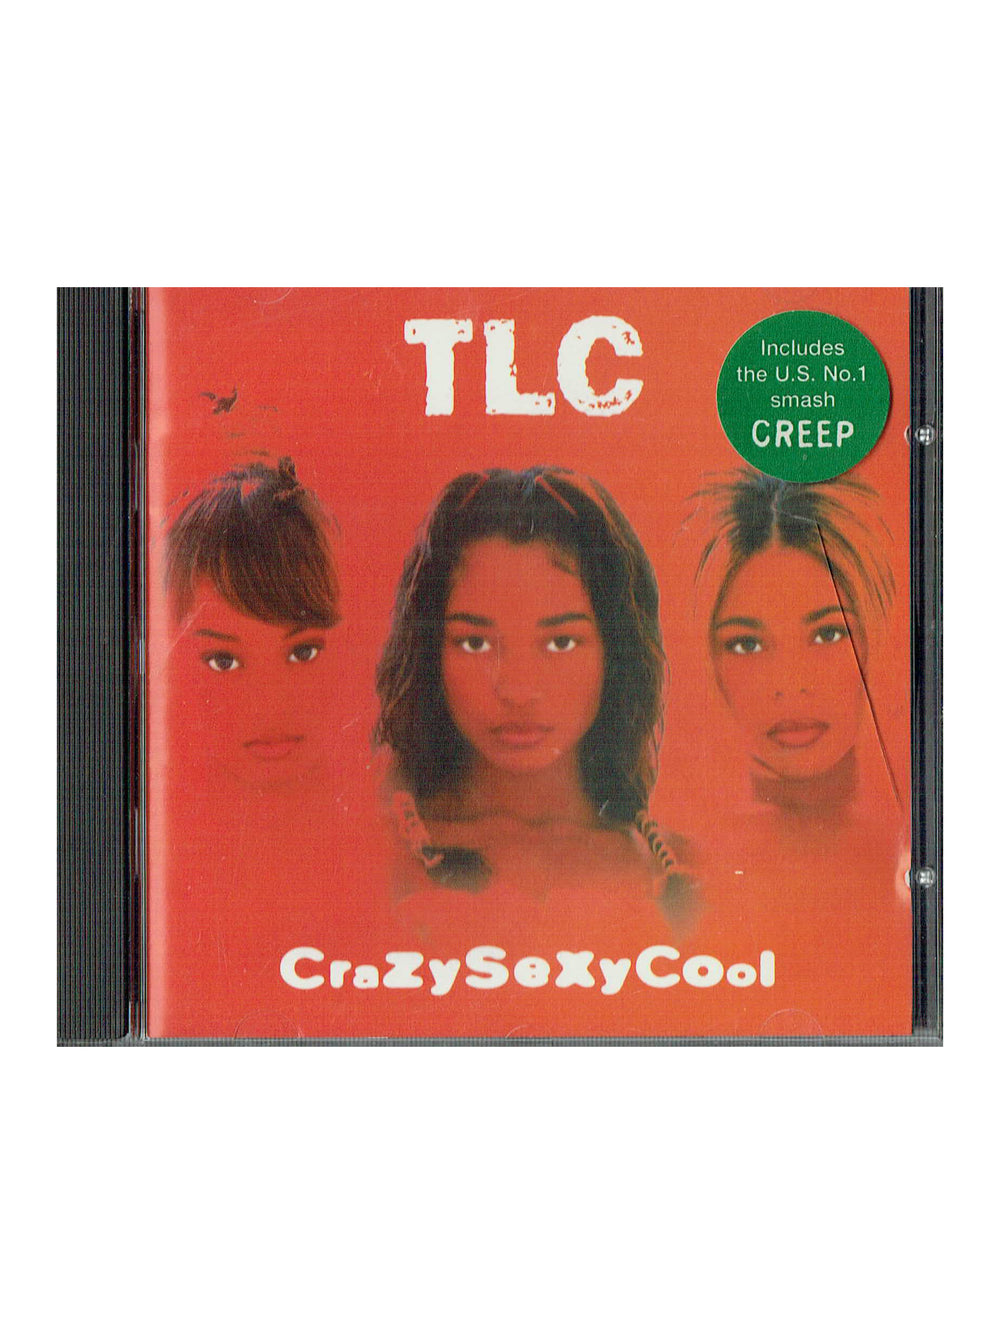 Prince – TLC CrazySexyCool CD Album(Prince Cover) EU Preloved:1994